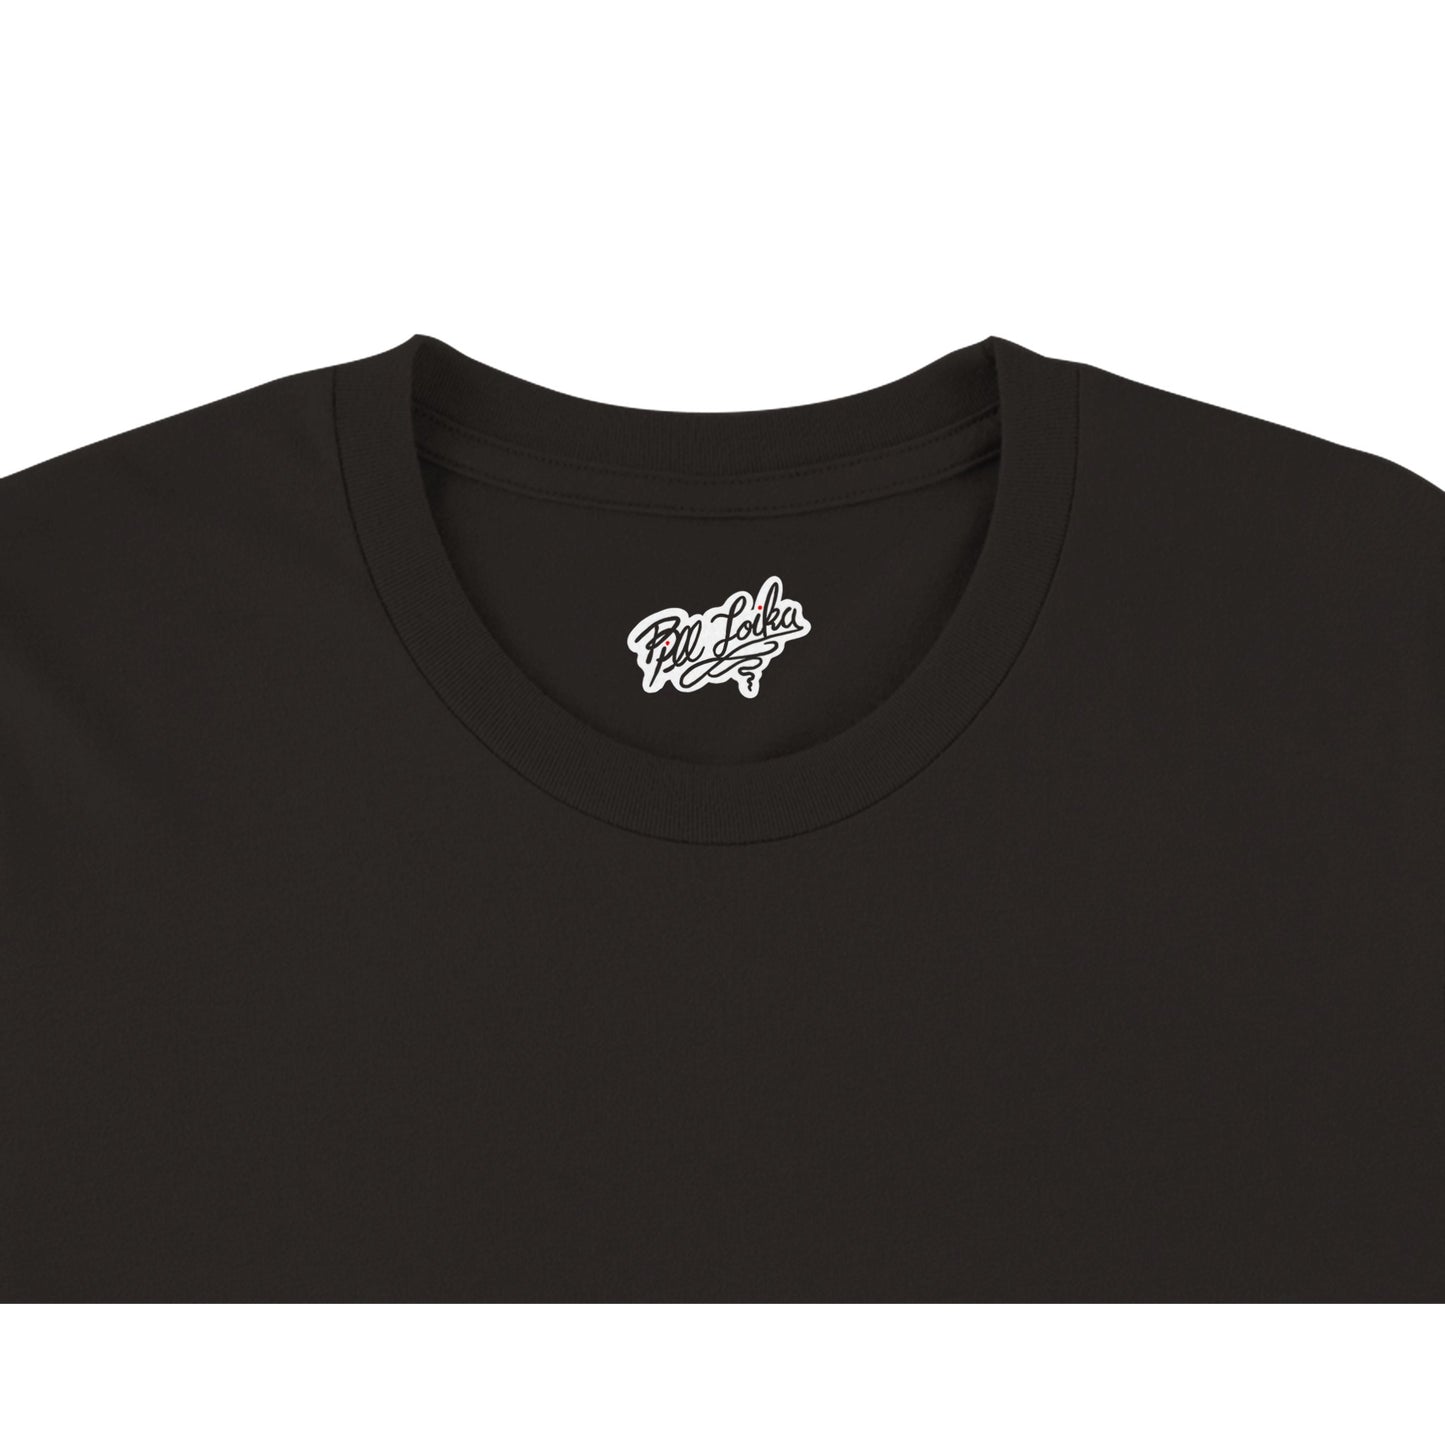 Premium "BILL LOIKA "POPPED!!" TIGER VS SNAKE Front Print" Unisex Crewneck T-shirt